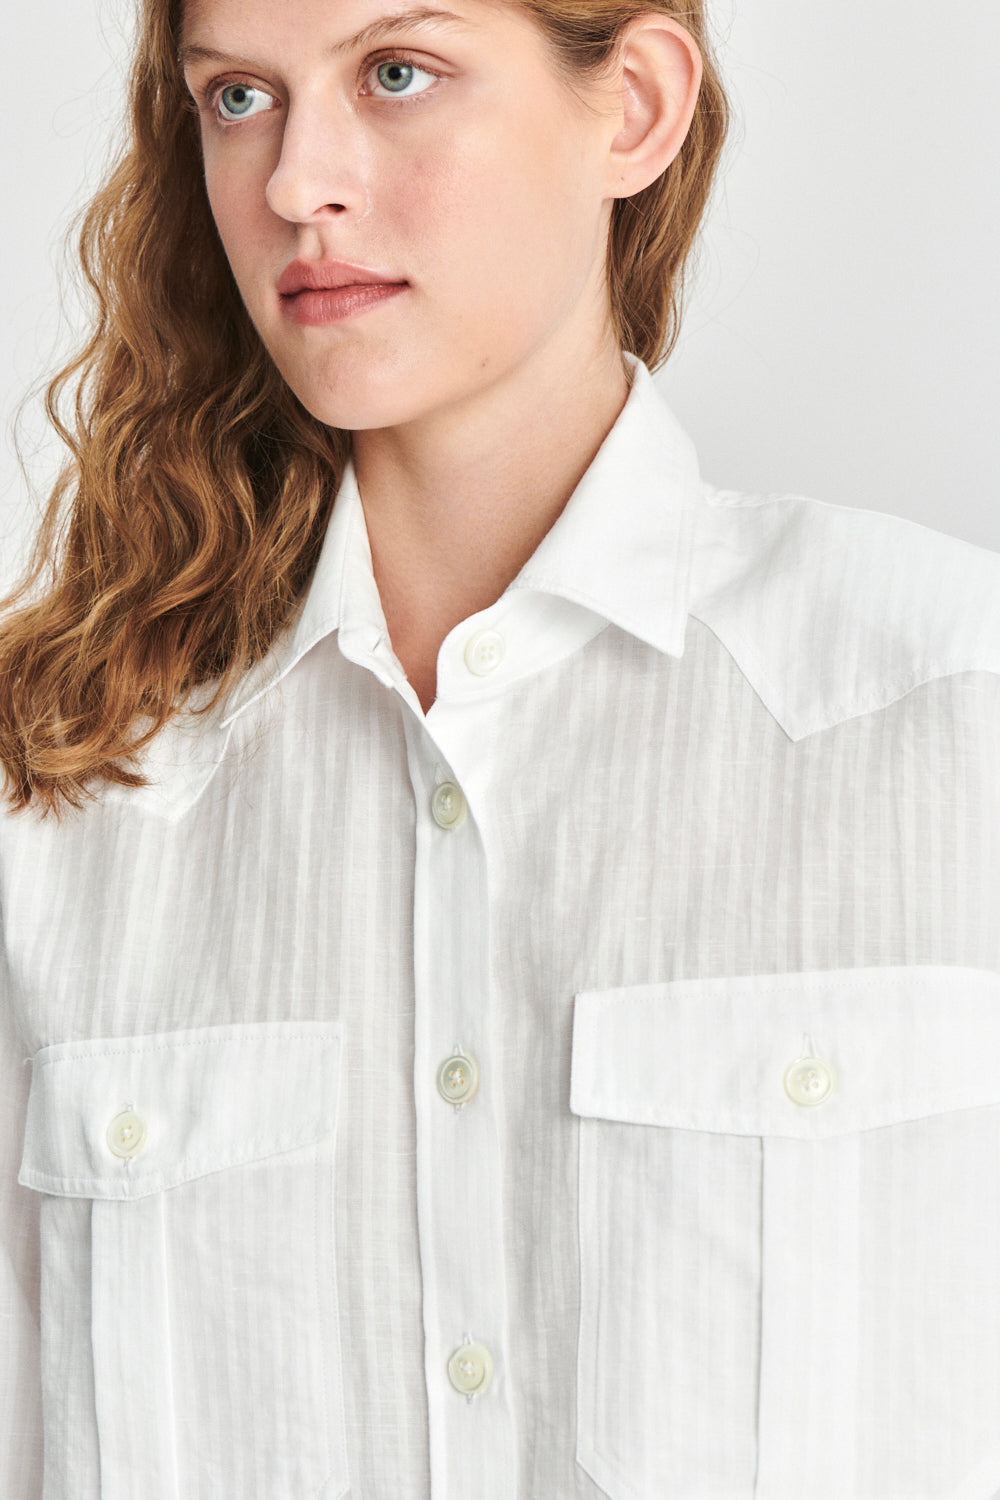 Shirt Jacket in a Subtle Soft White Cotton and Linen Seersucker